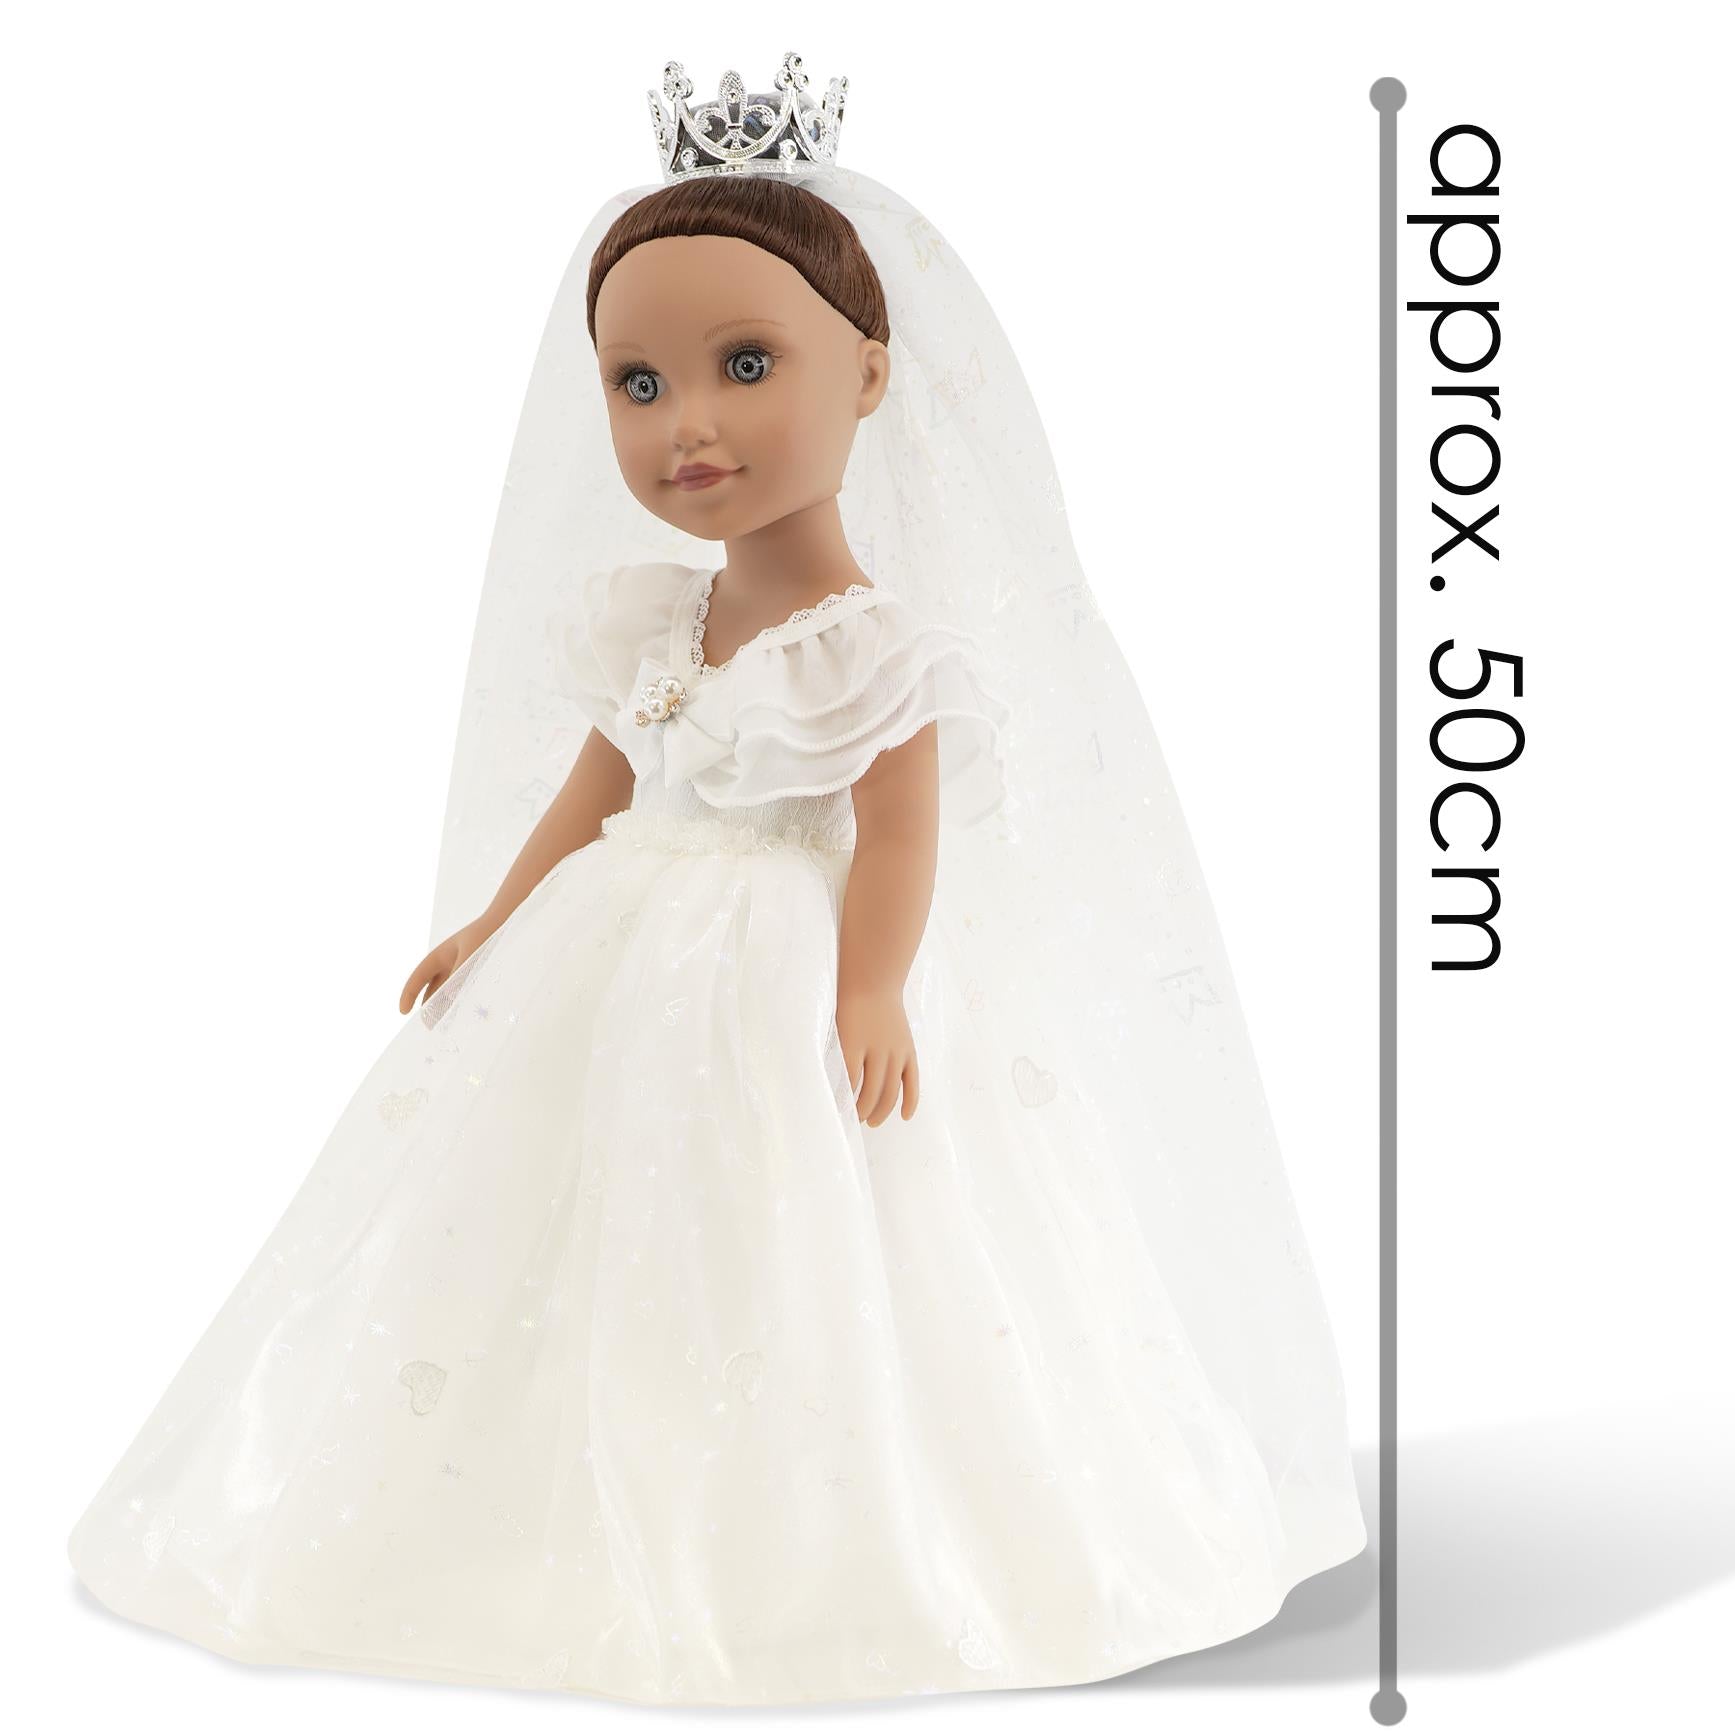 BiBi Fashion Doll "BRIDE LILY" (47 cm / 18") by BiBi Doll - The Magic Toy Shop